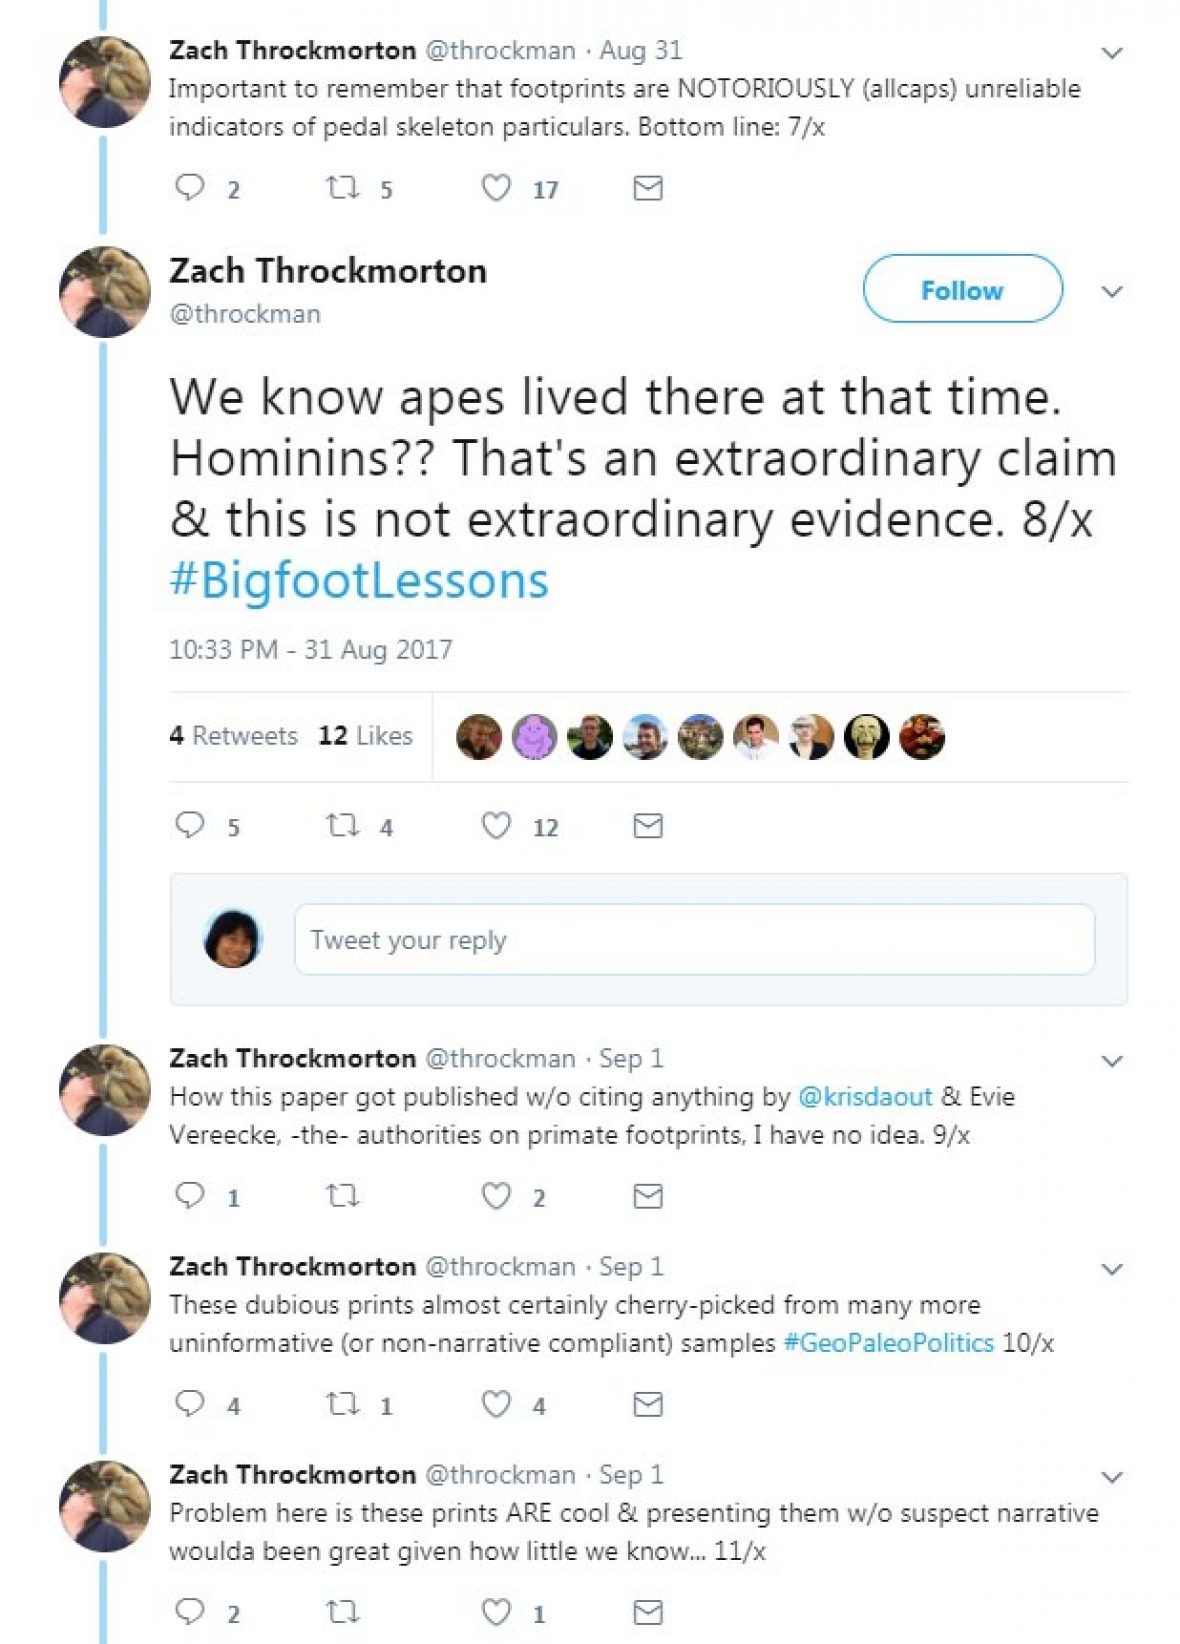 Zack Throckmorton post on Trachilos footprints